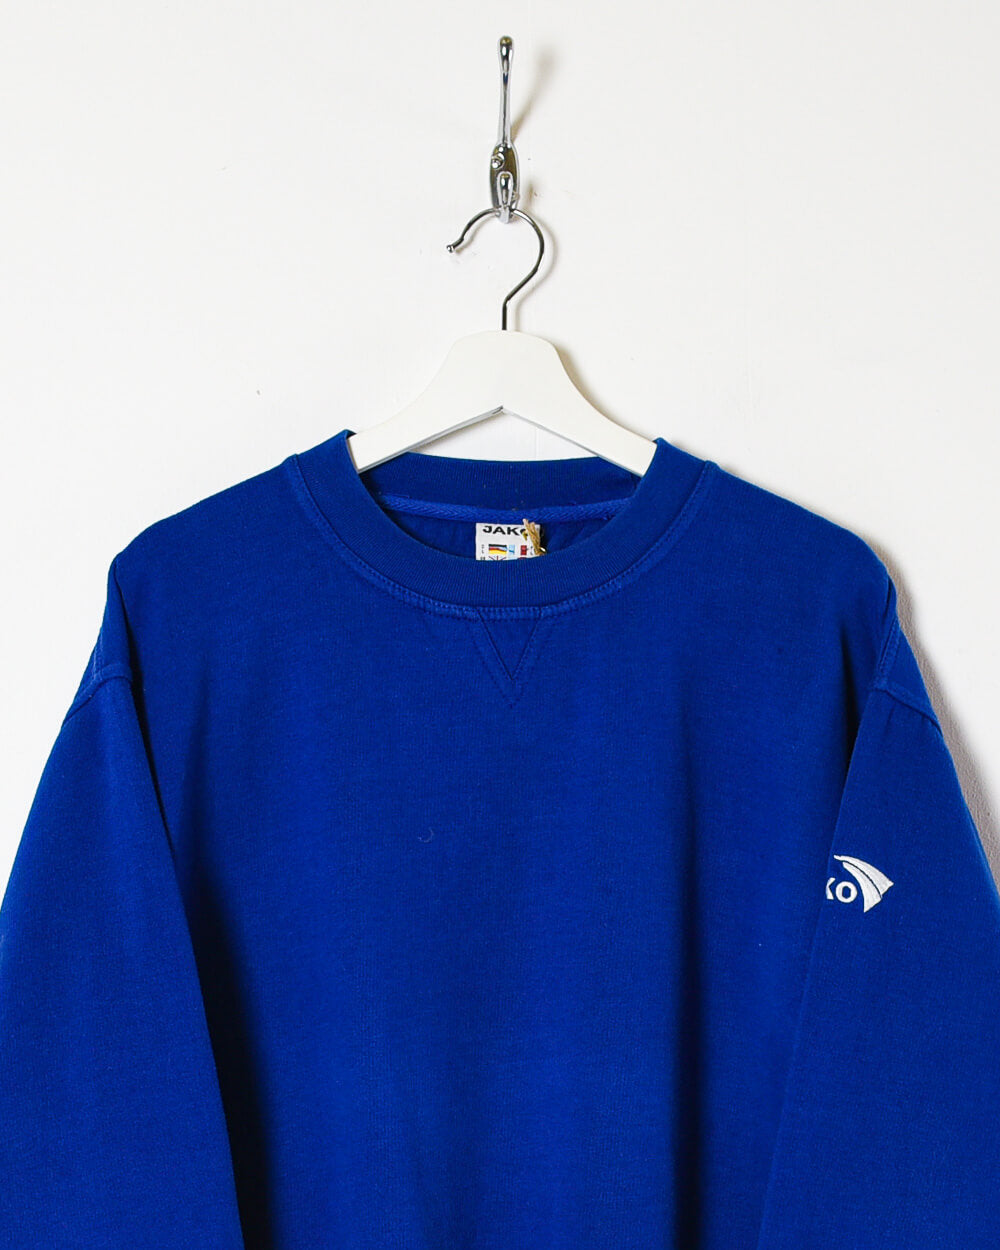 Blue Jako Sv Waldhausle 1925 Sweatshirt - Medium